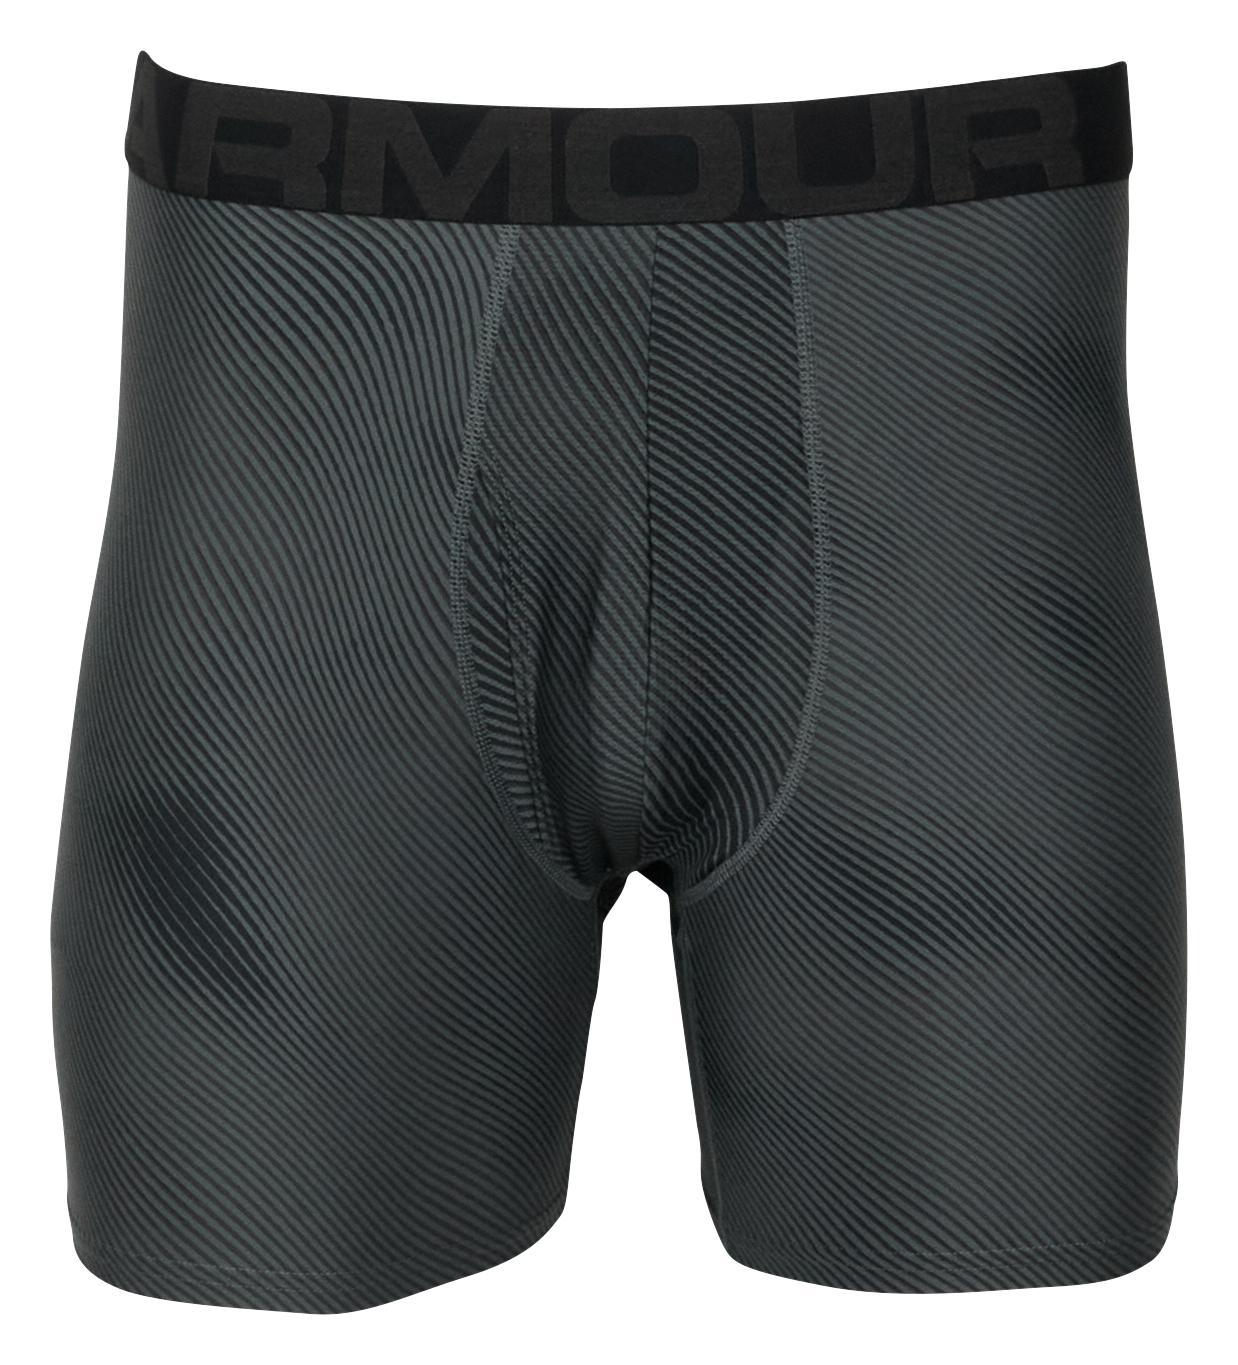 Under Armour Tech 6"" Patterned Boxerjock Shorts for Men - Pitch/Jet Gray - 3XL